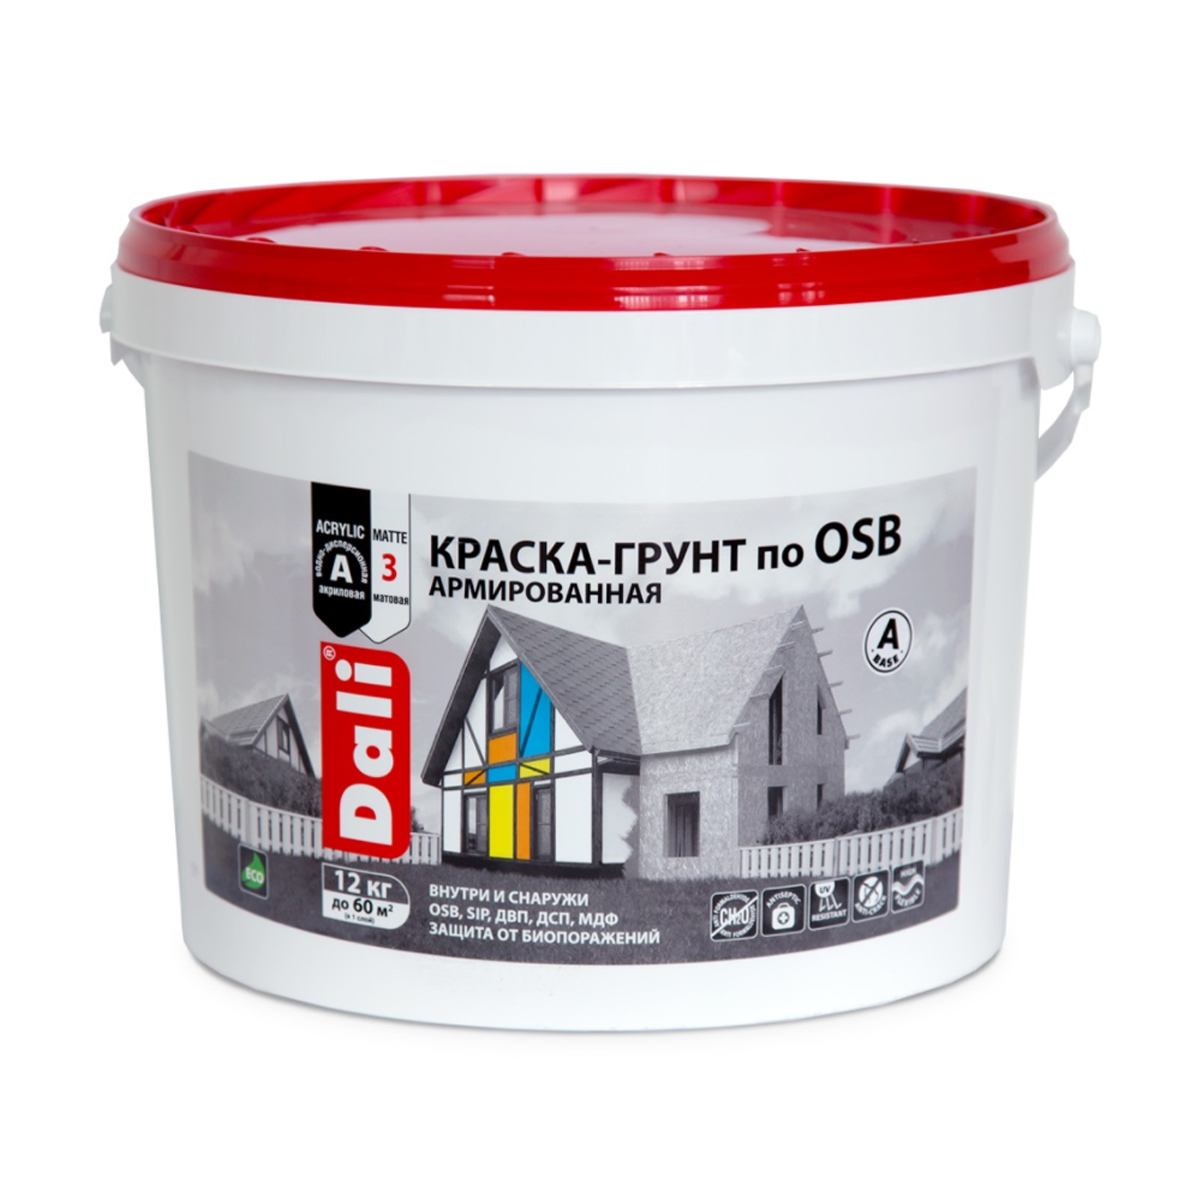 Краска-грунт по OSB Dali, армированная, матовая, база A, белая, 12 кг грунт для плит osb neomid